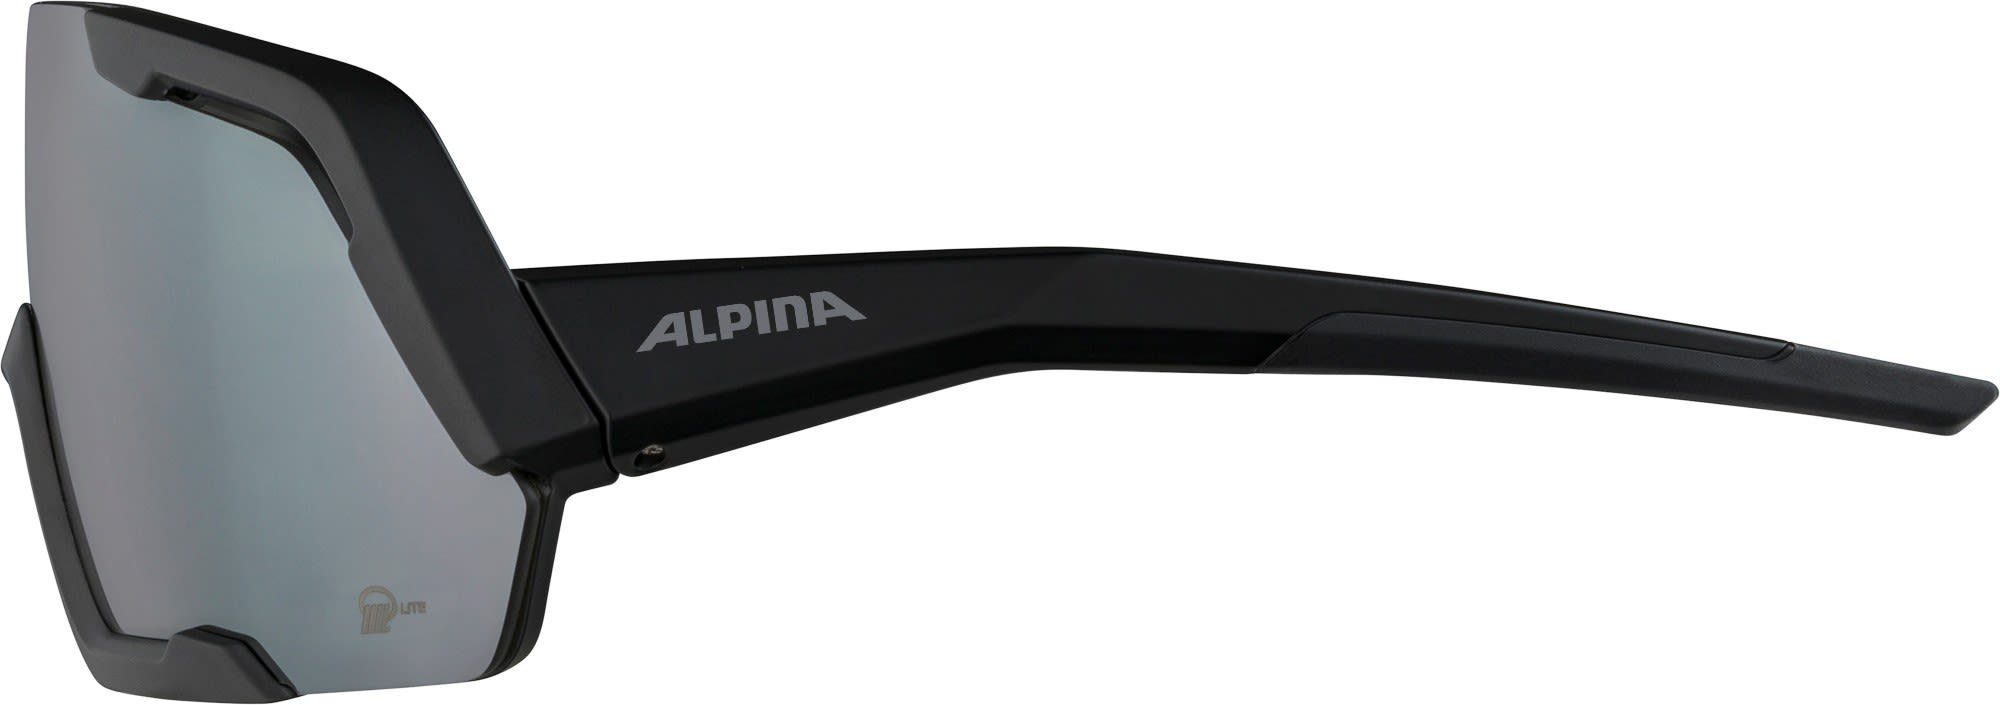 Alpina Sportbrille Alpina Accessoires Rocket - Mirror Silver Black Matt Q-lite